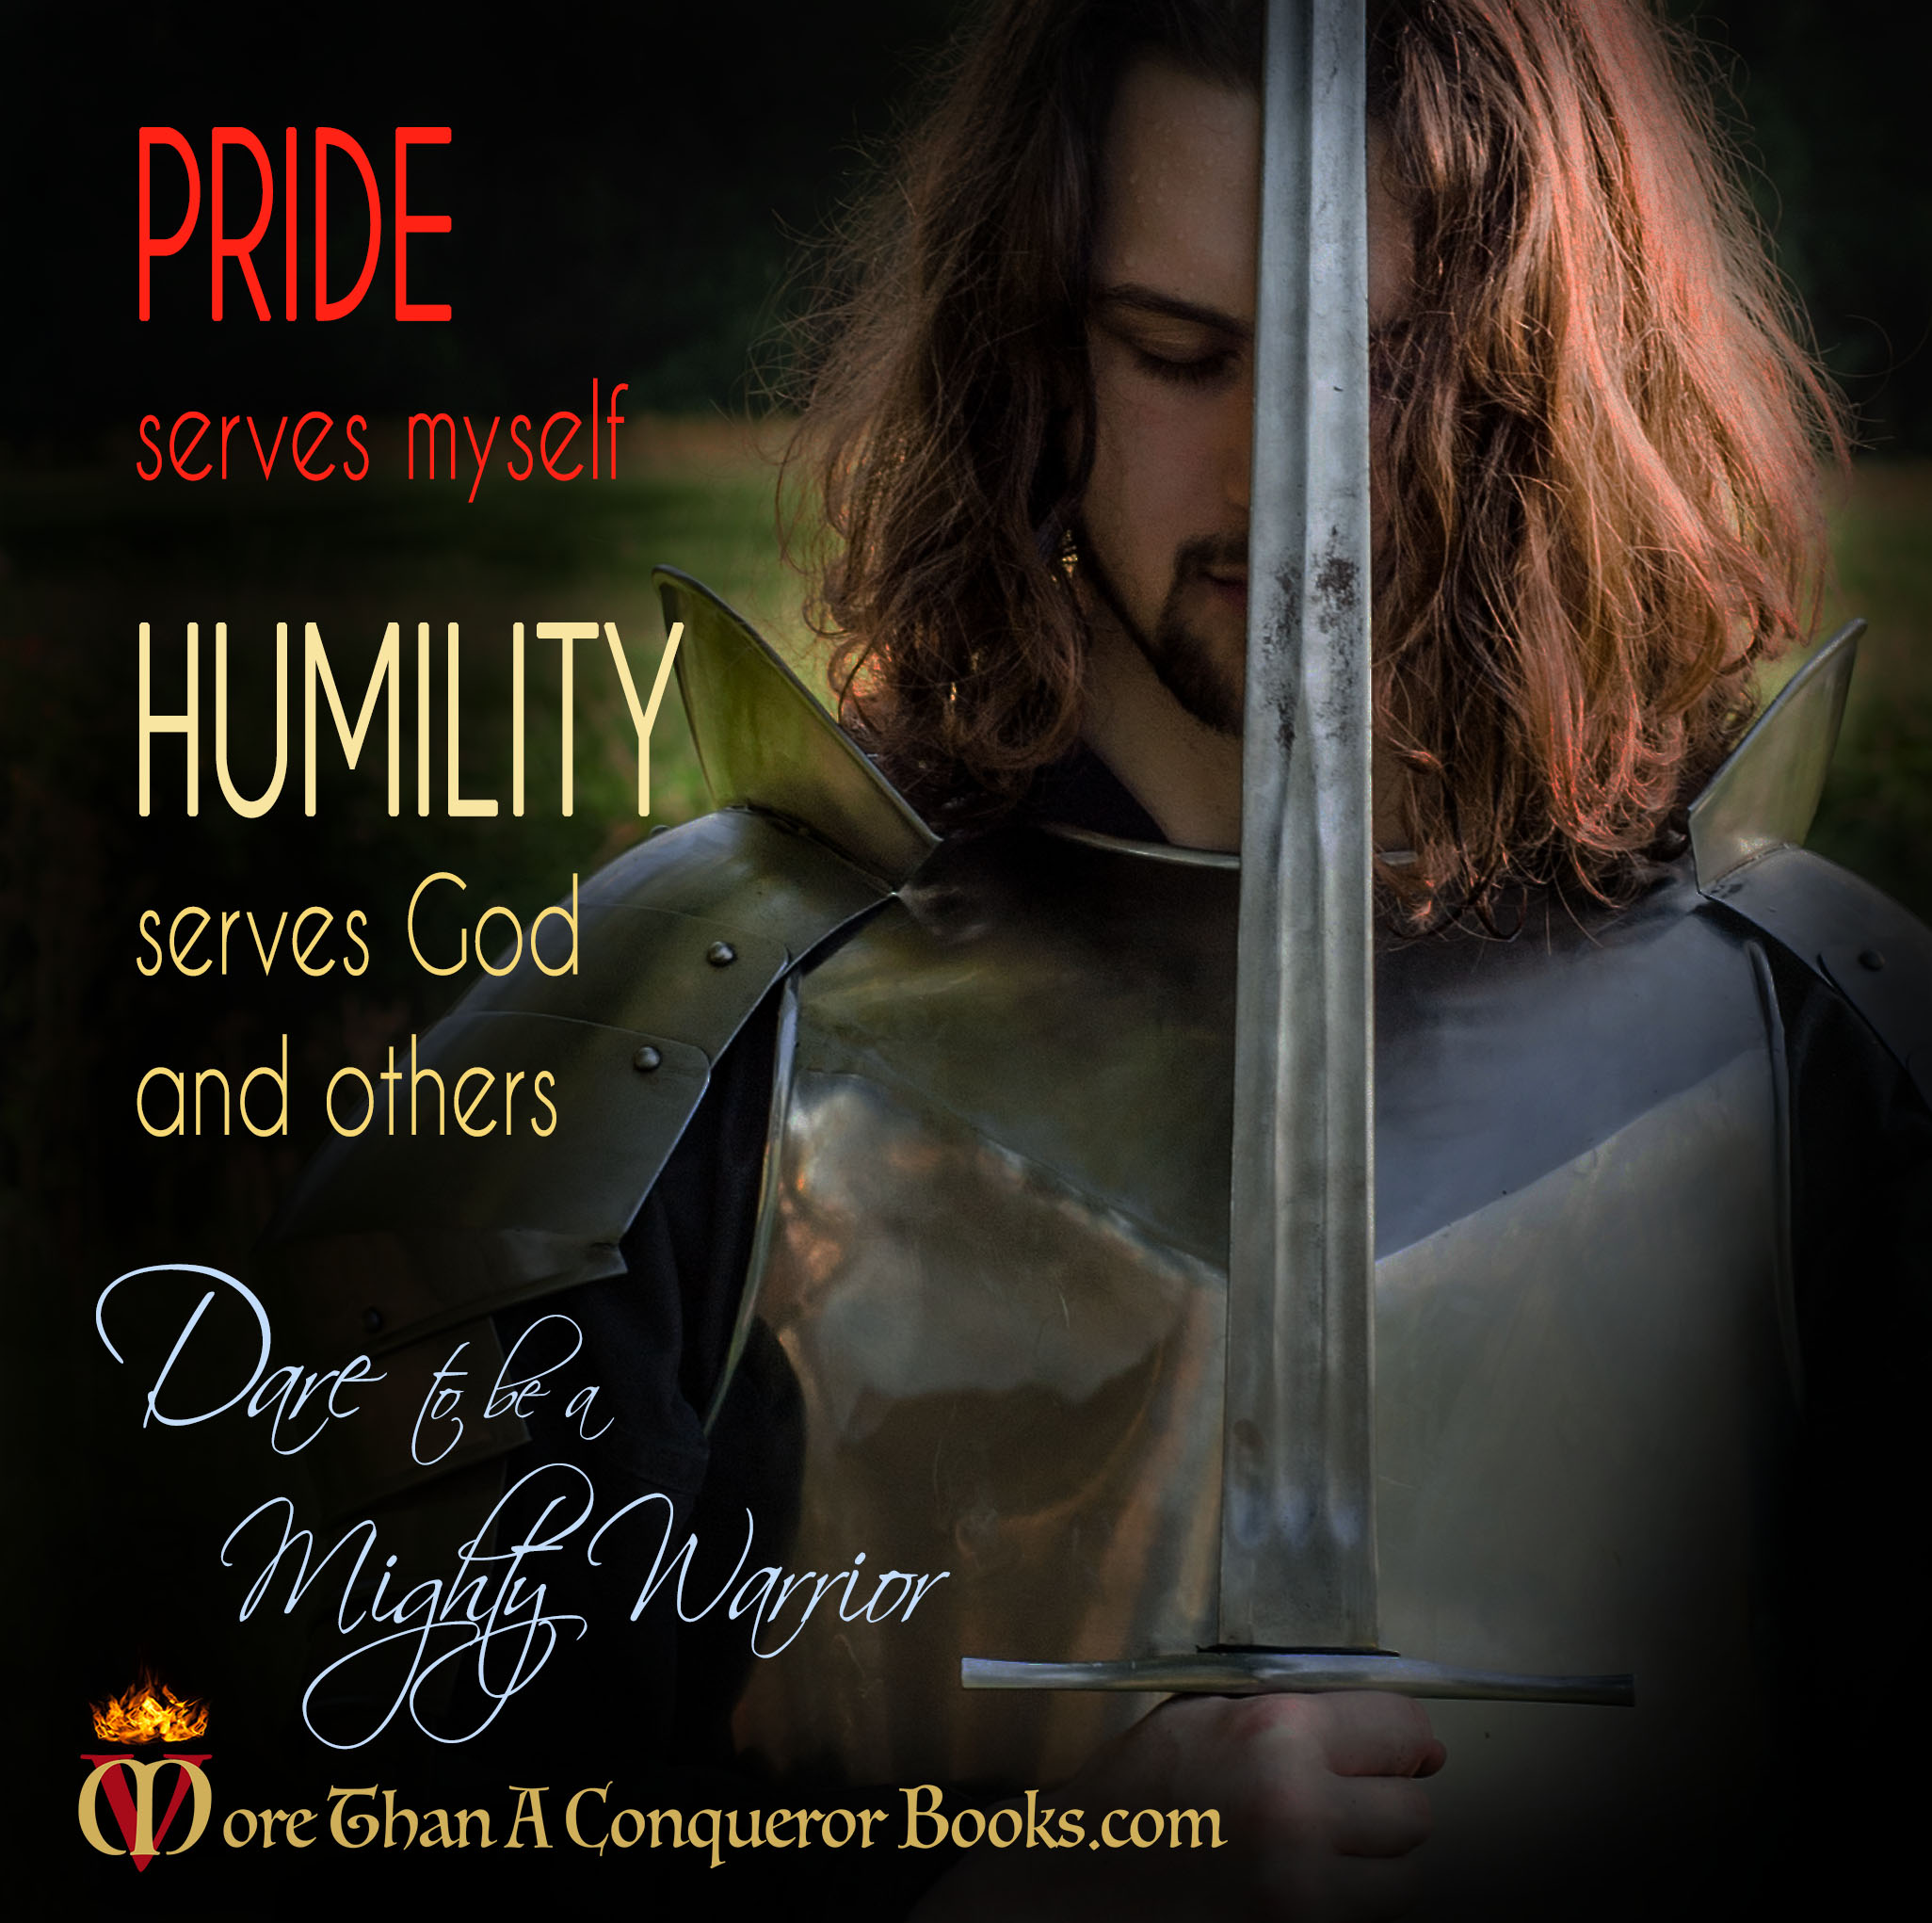 pride serves myself-humility serves God and others-Mikaela Vincent-MoreThanAConquerorBooks-1